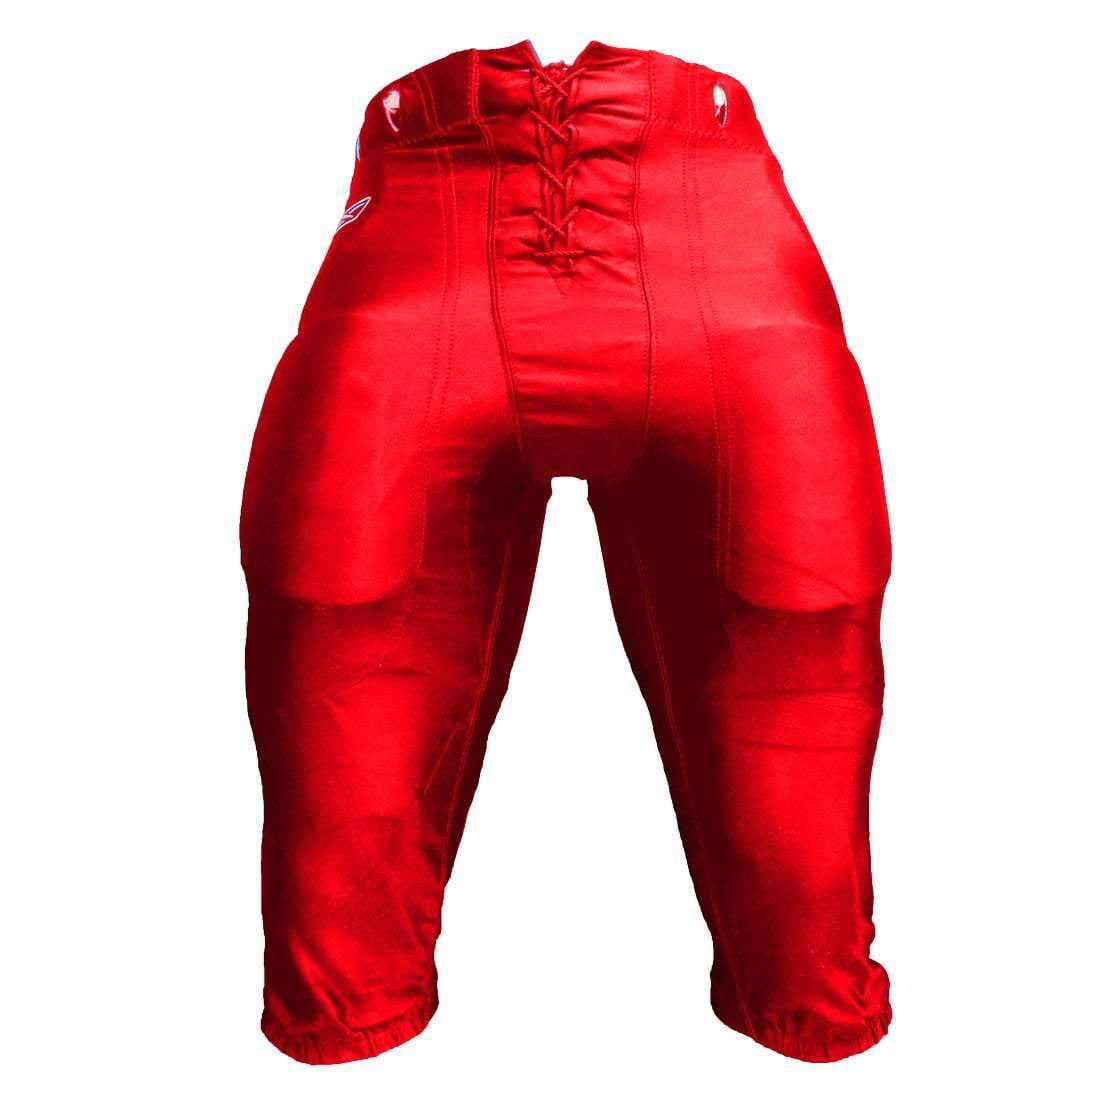 Lot of 25 New Reebok Adult Nylon/Spandex Football Pants Many Colors A203 